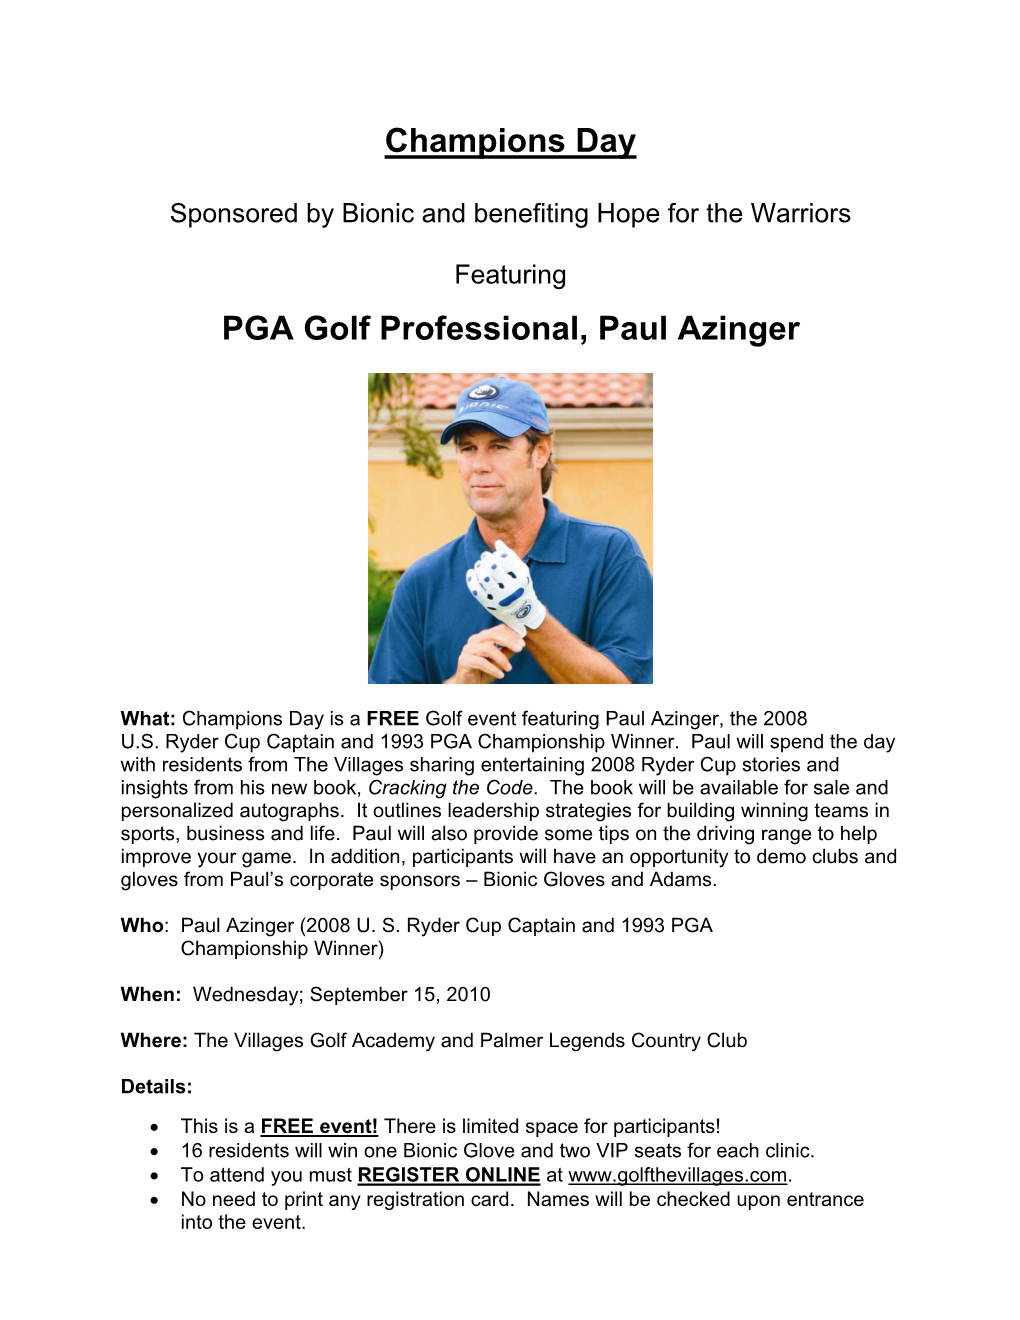 Champions Day PGA Golf Professional, Paul Azinger